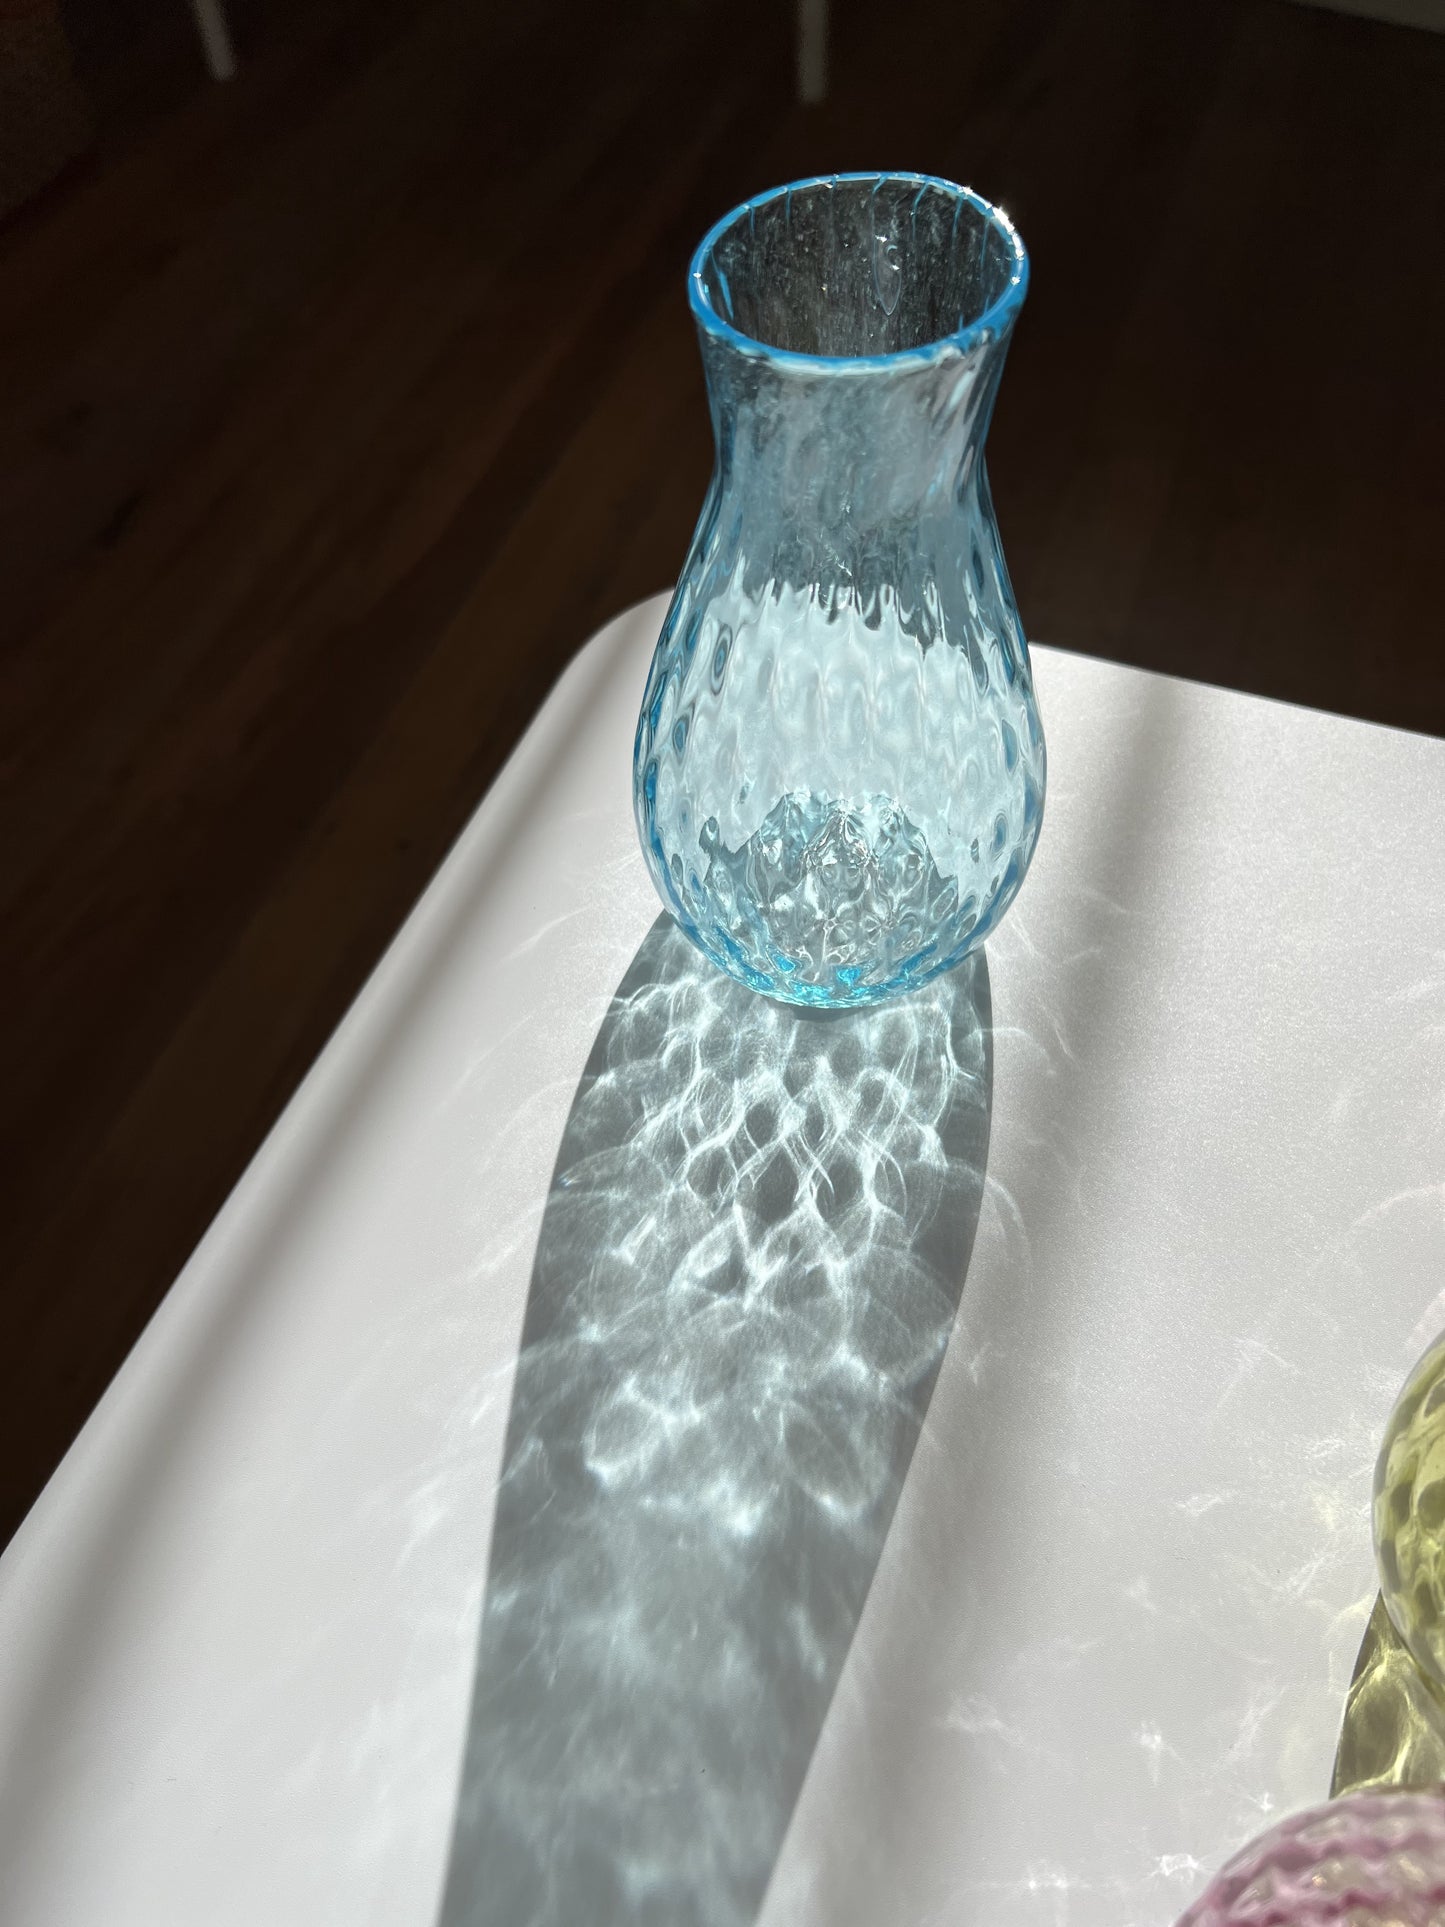 Special Edition Handblown Glass Vase - Copper Blue